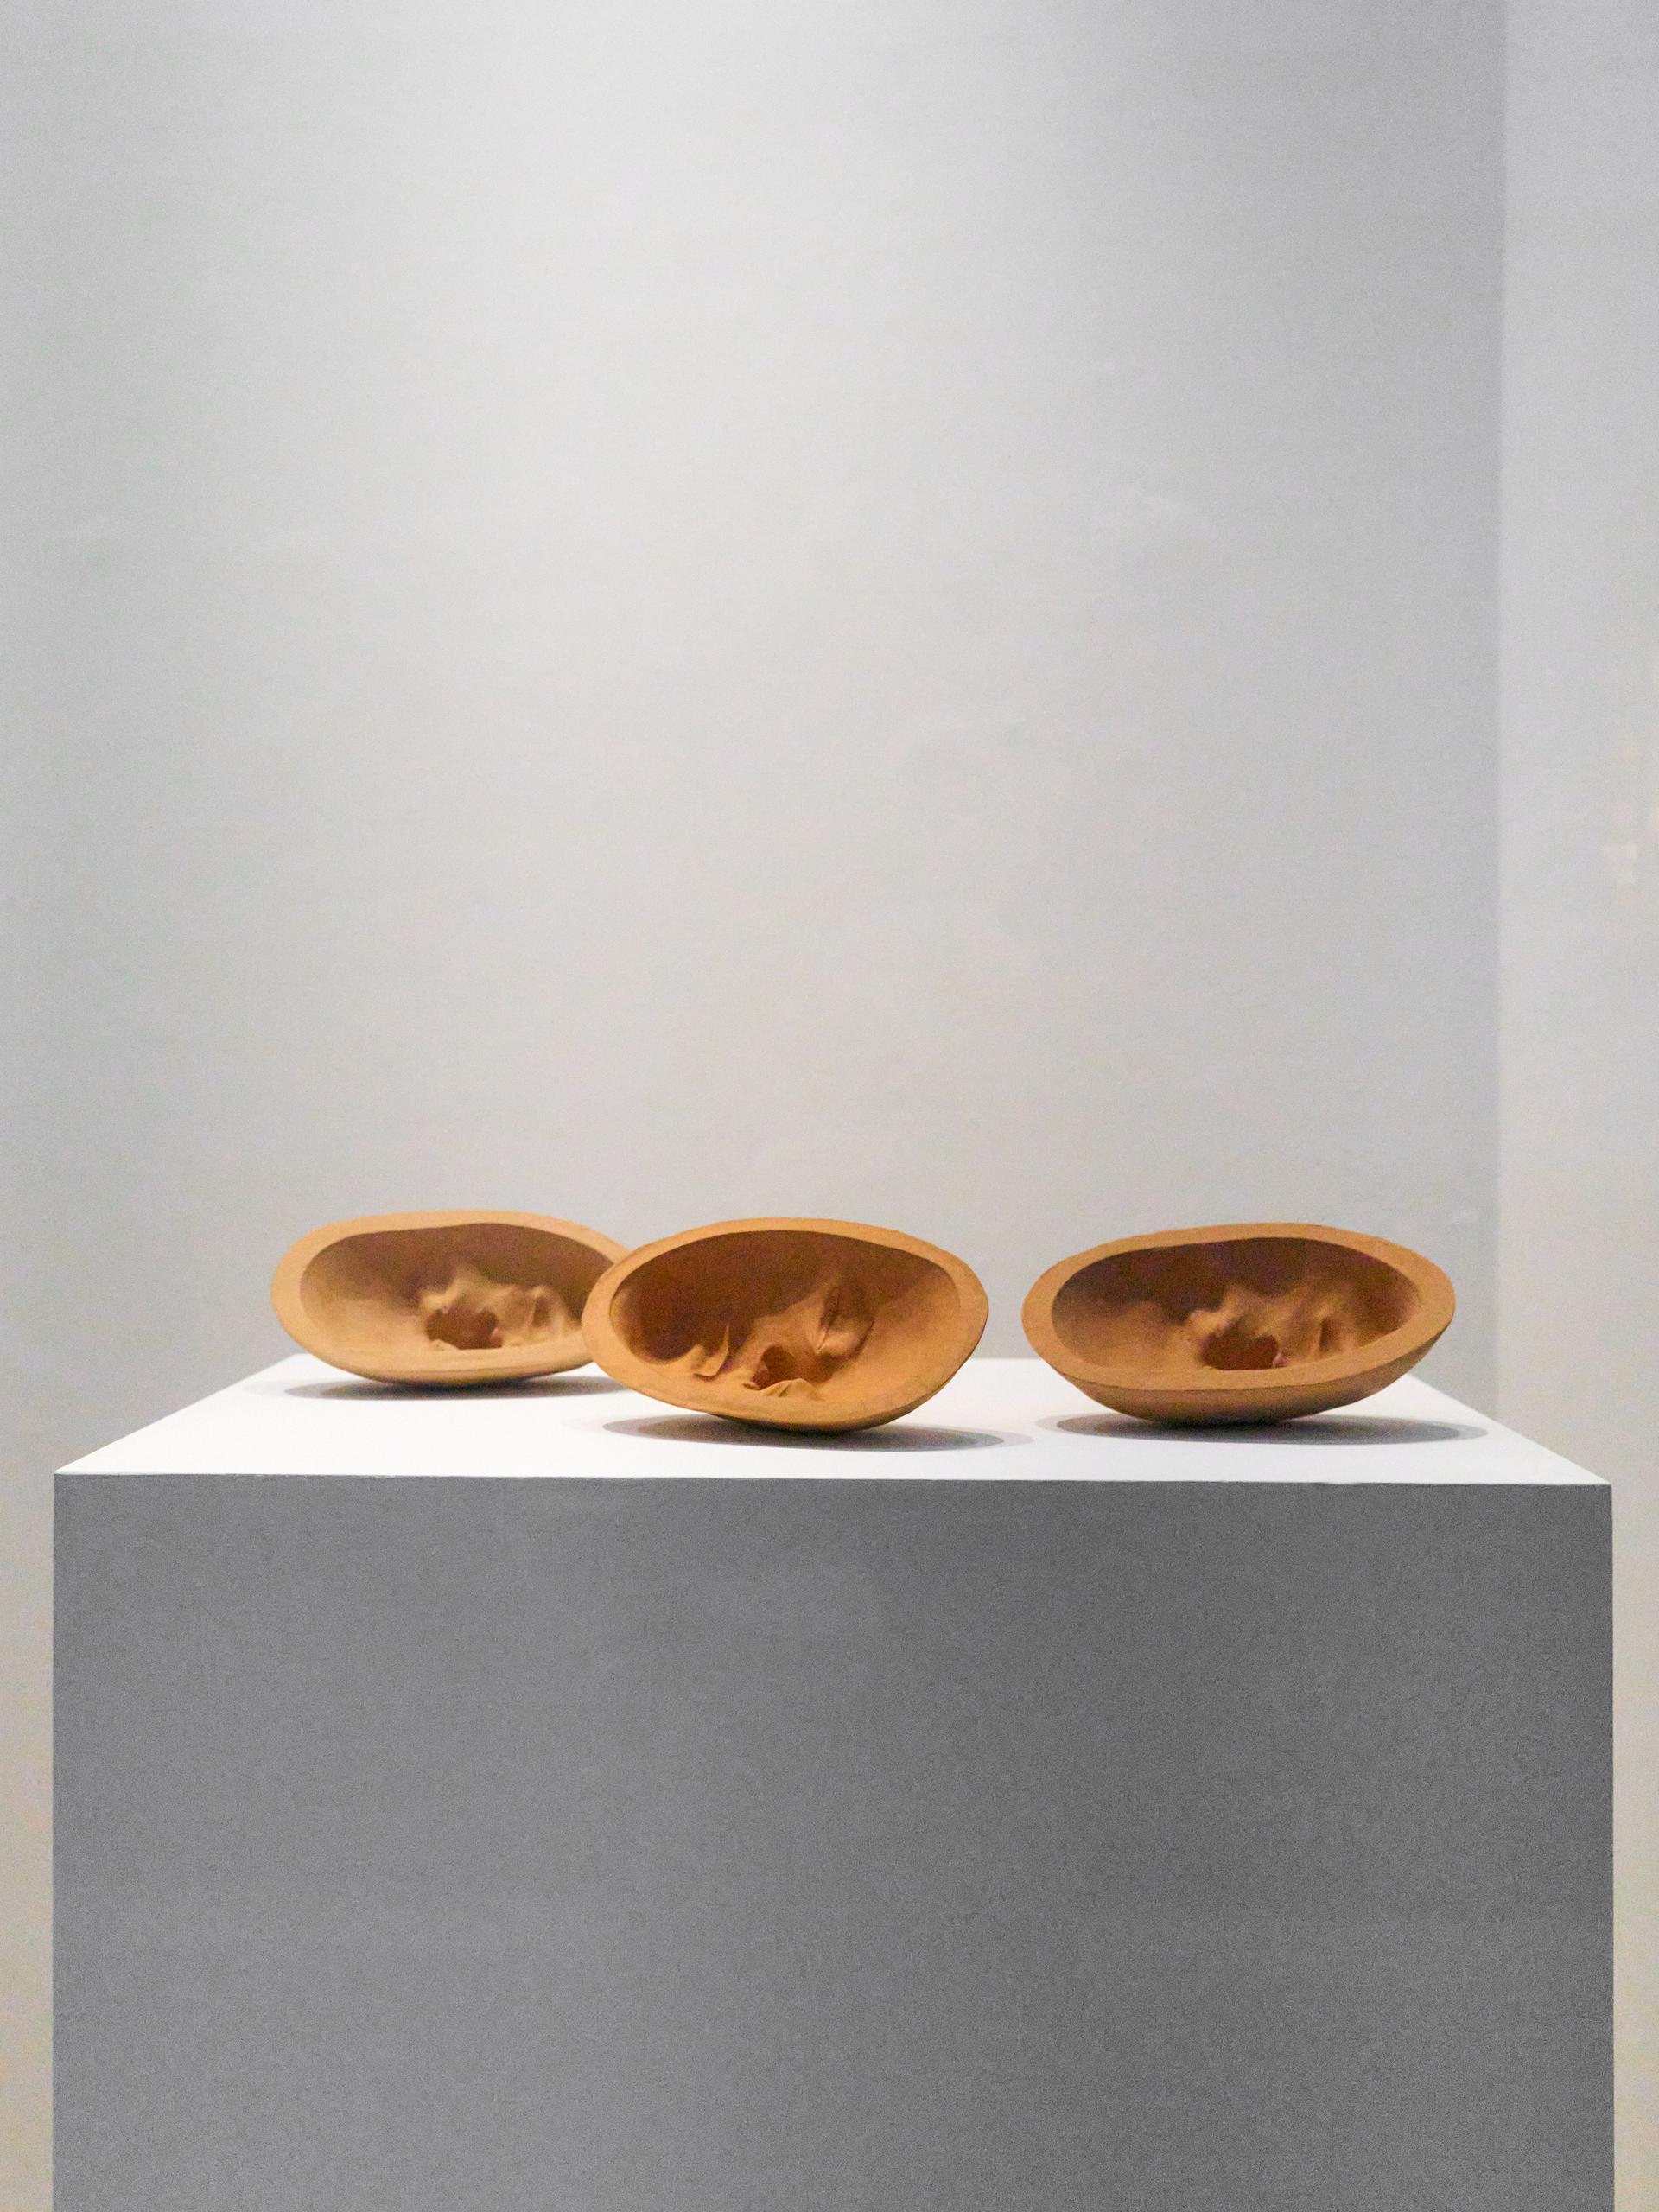 5. Installation view, FAVENTIA. Ceramica italiana contemporanea, BUILDINGBOX, Milano, ph. Sarah Indriolo